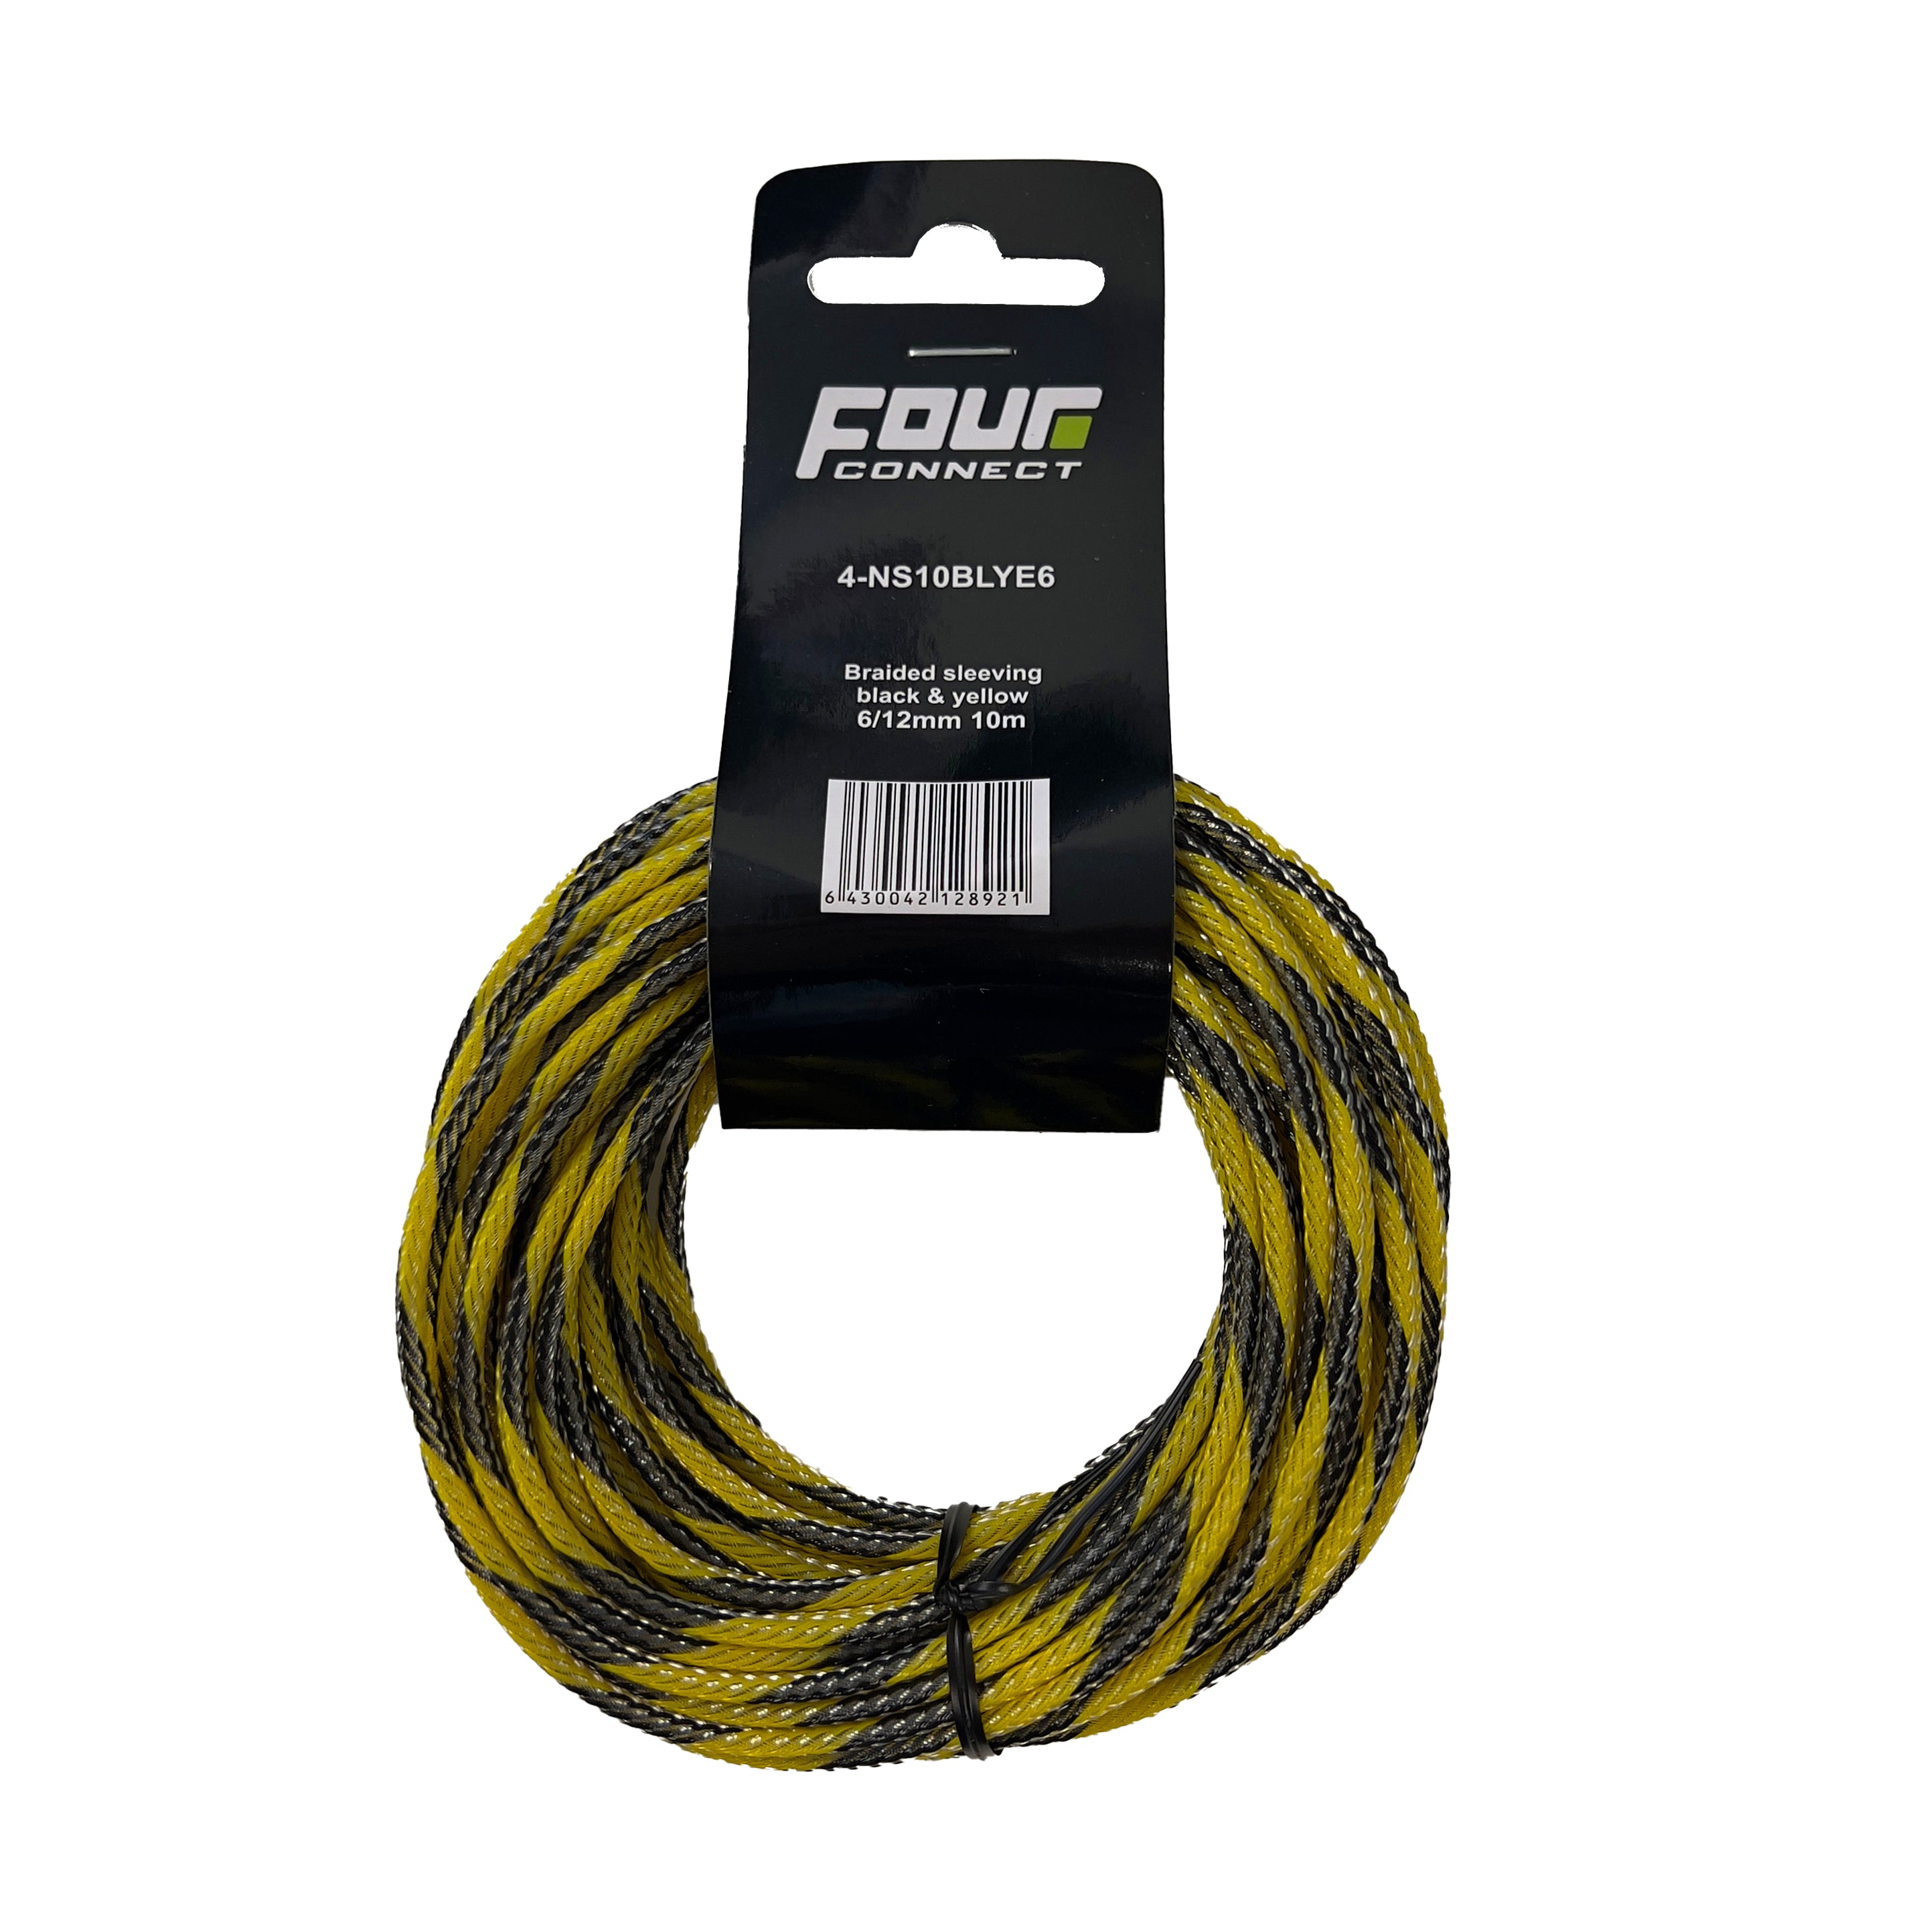 FOUR Connect 4-NS10BLYE6 nylon sock black-yellow 6/12mm 10m